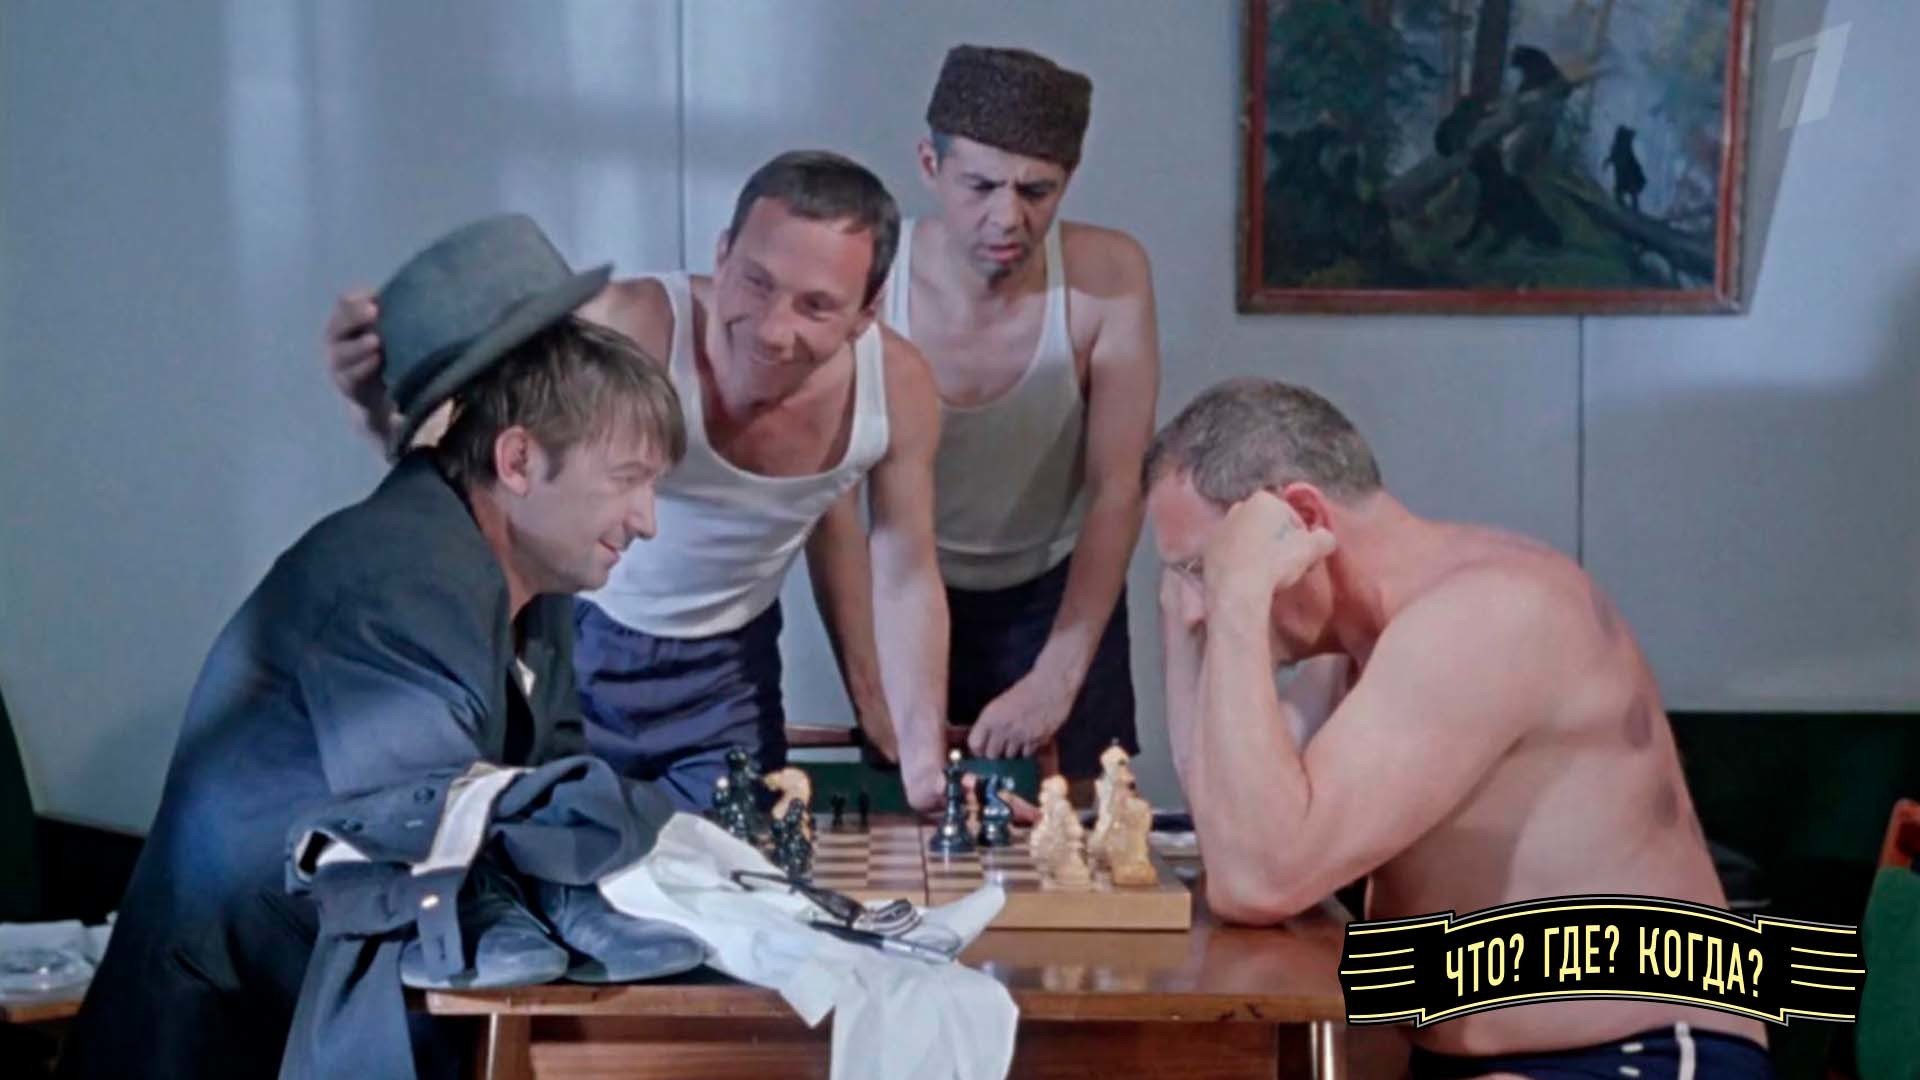 Сроду не видал. Крамаров джентльмены удачи шахматы. Джентльмены удачи игра в шахматы.